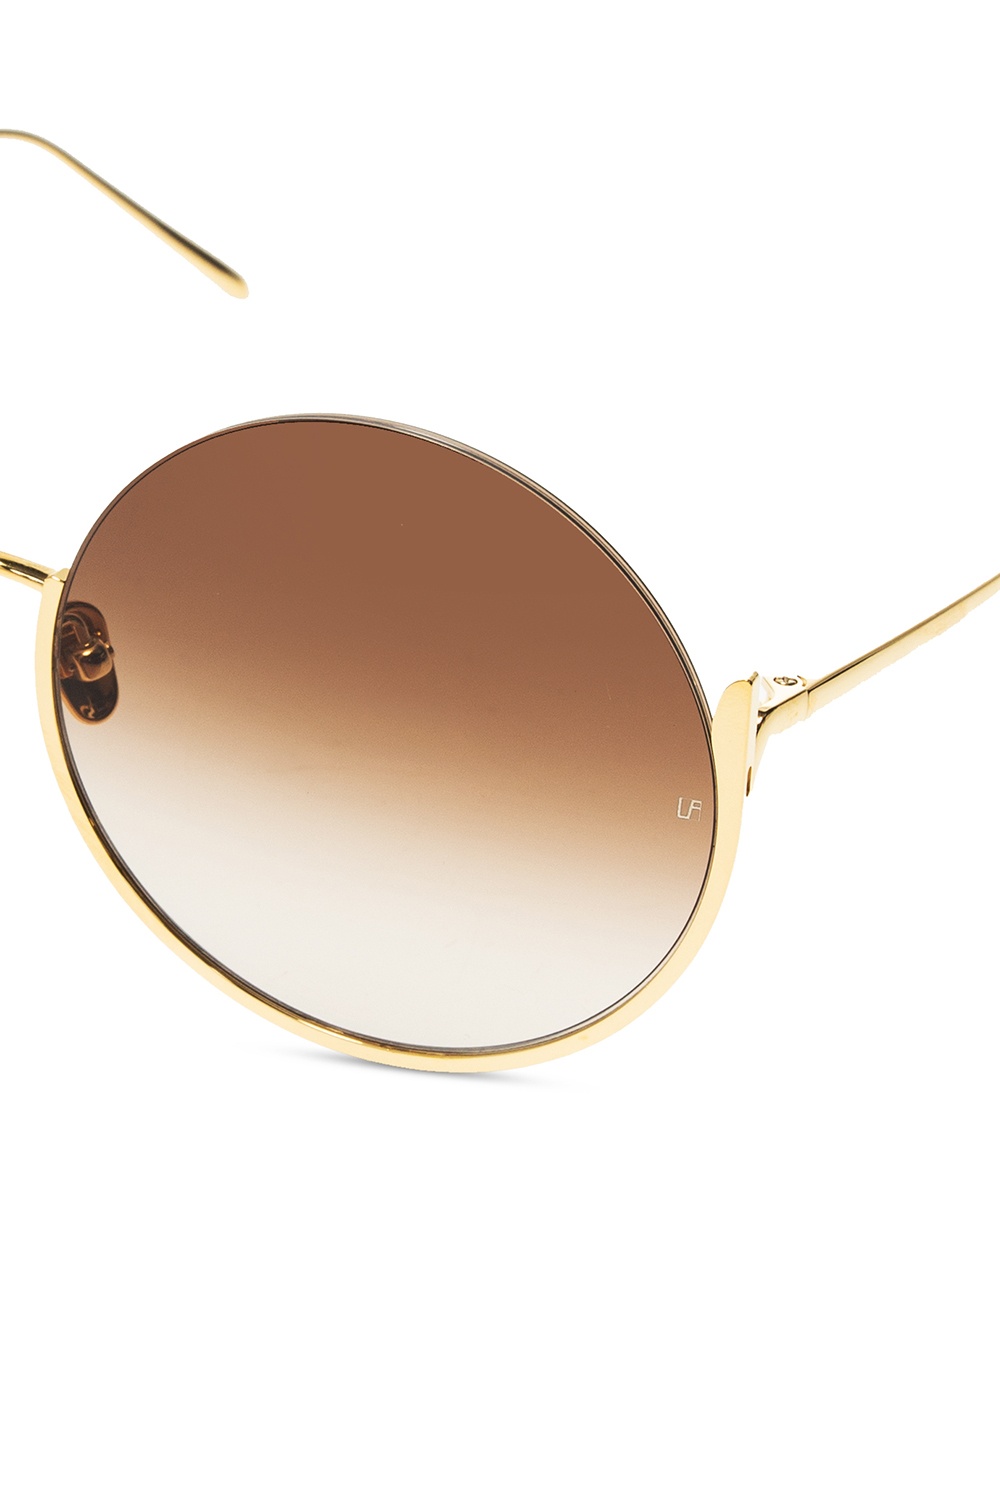 Linda Farrow ‘Olivia’ sunglasses